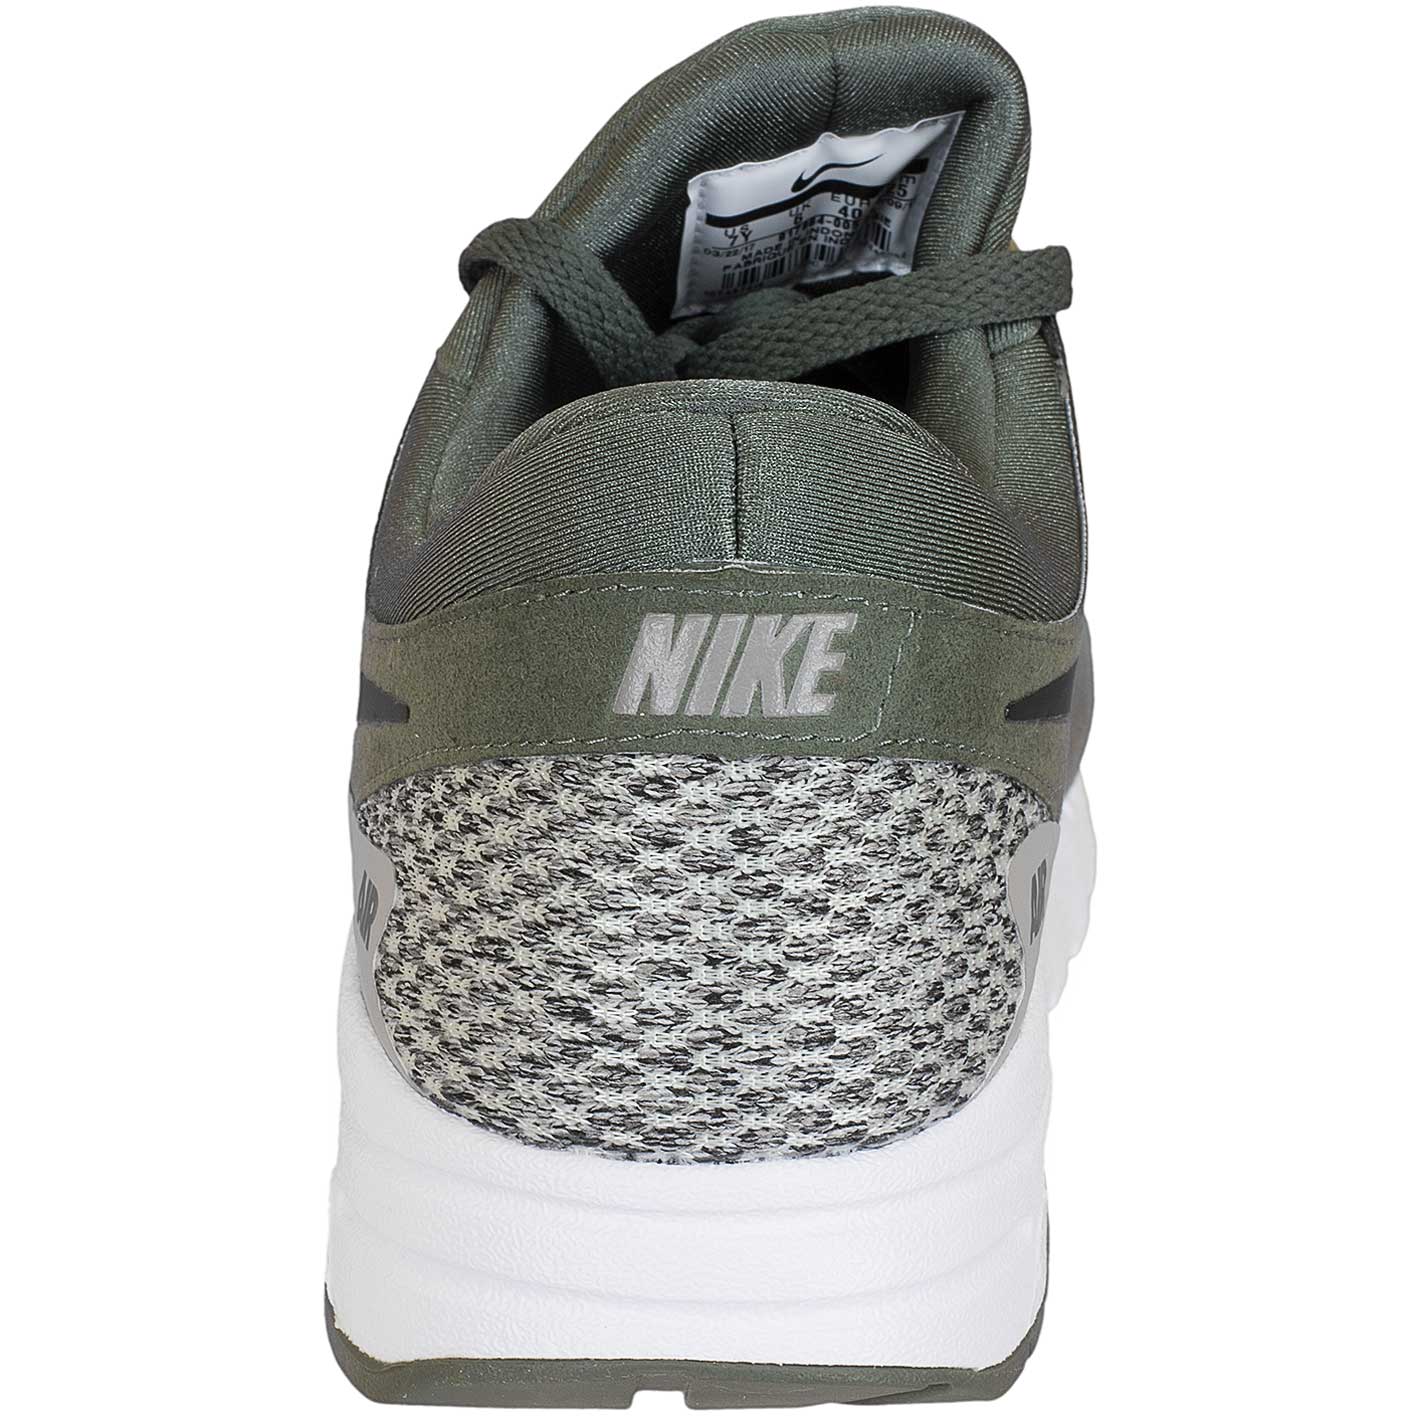 ☆ Nike Damen Sneaker Air Max Zero SE oliv - hier bestellen!